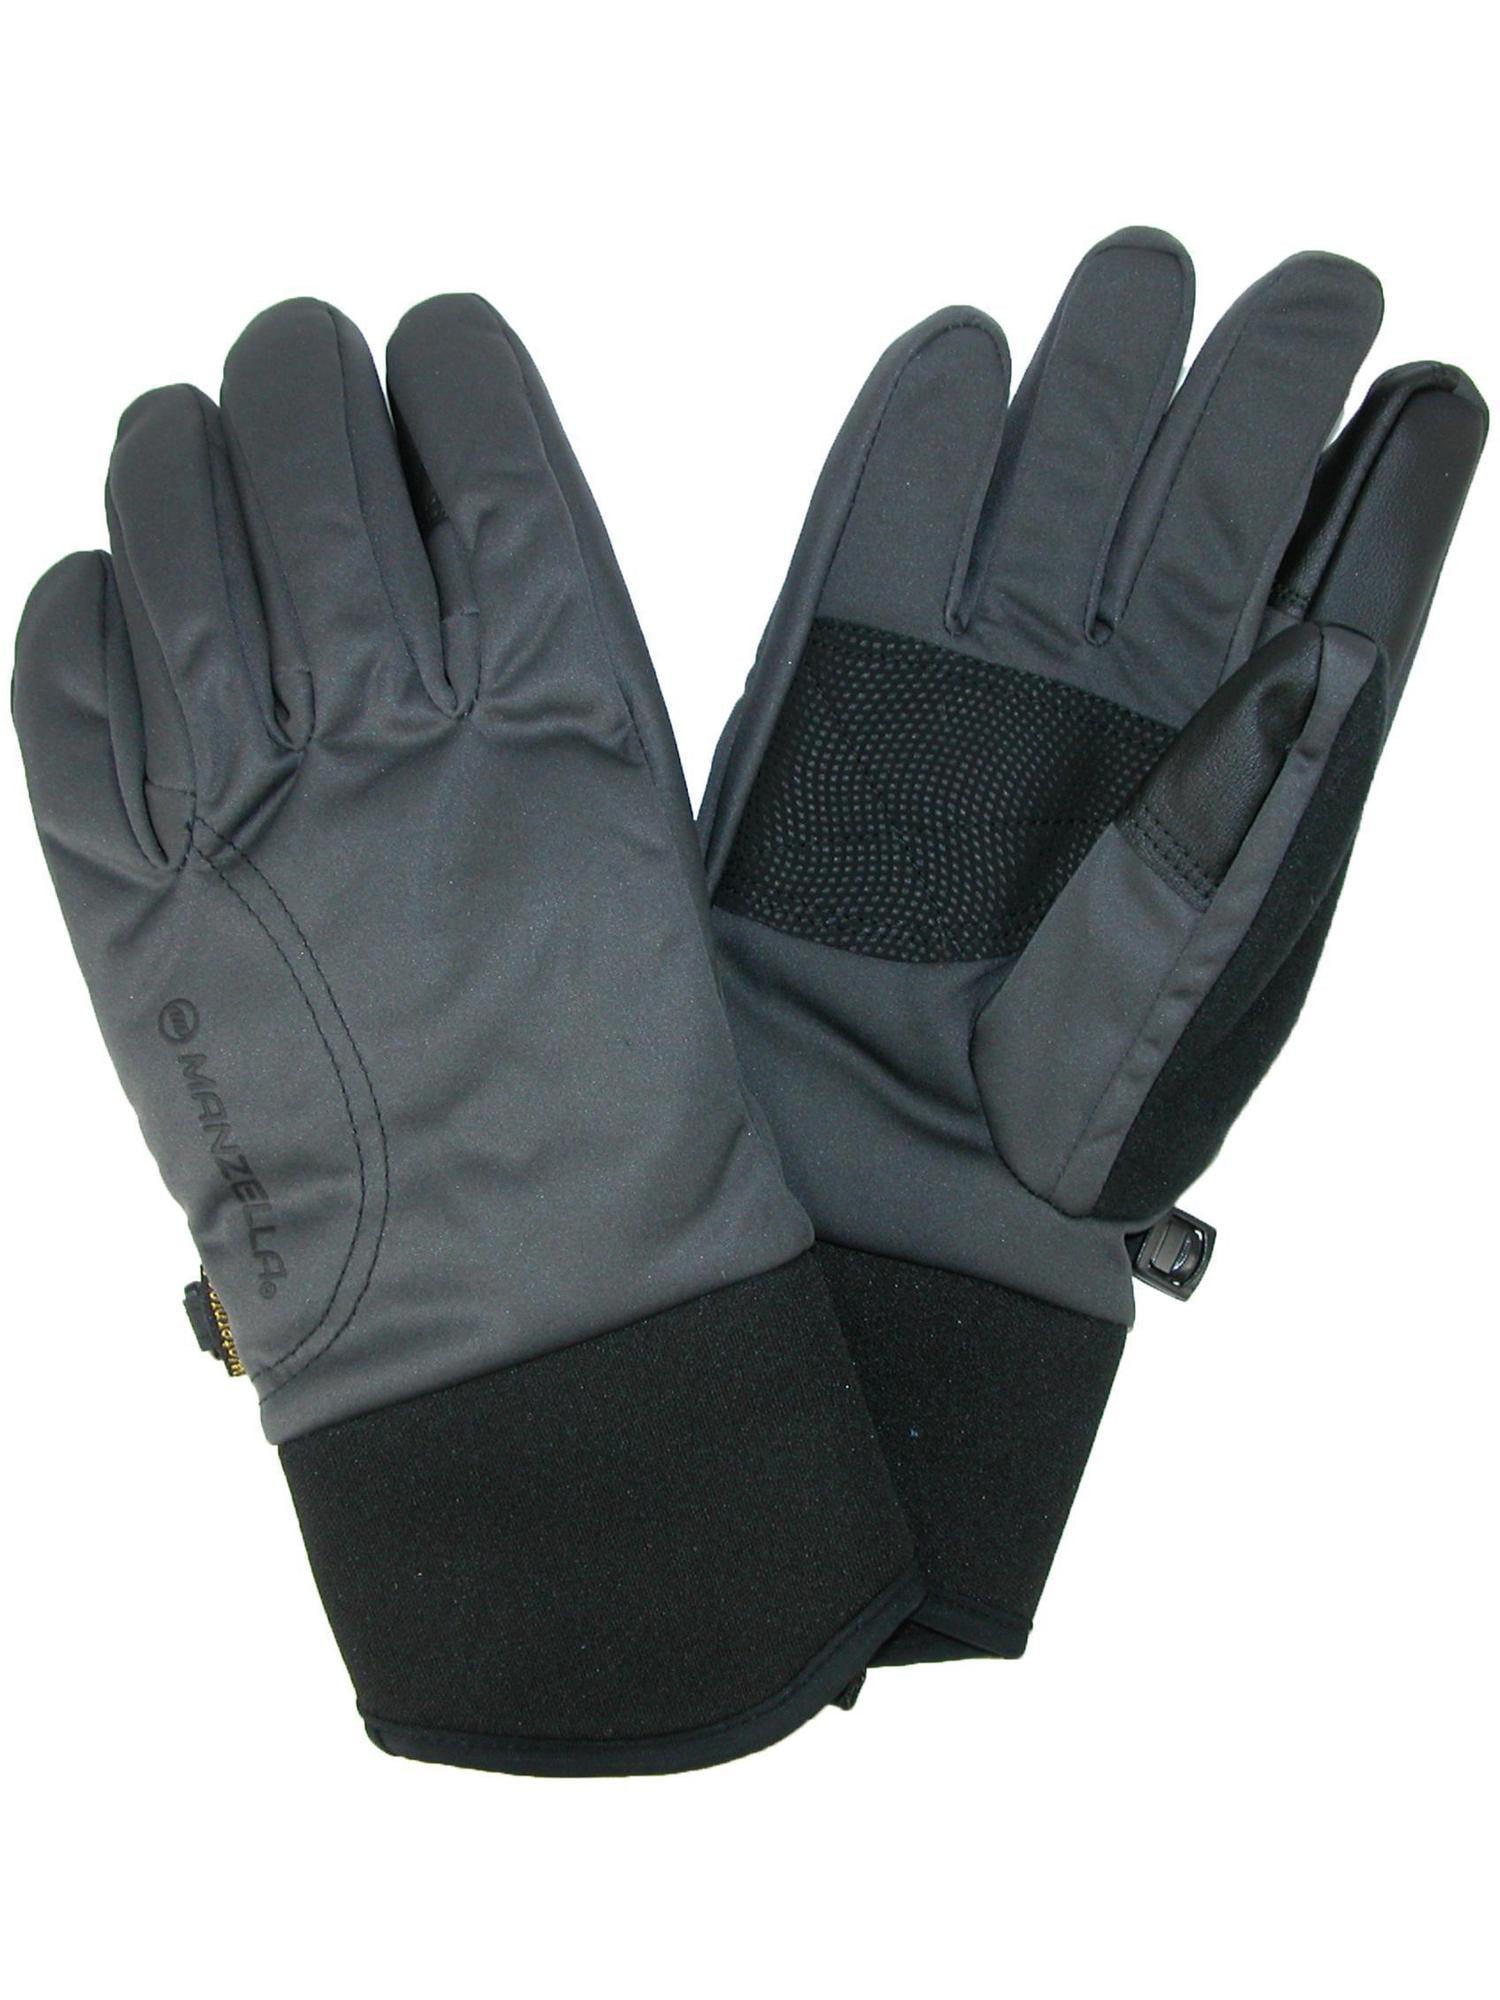 Manzella Women’s All Elements 3.0 Waterproof Winter Gloves Grey Size Large 